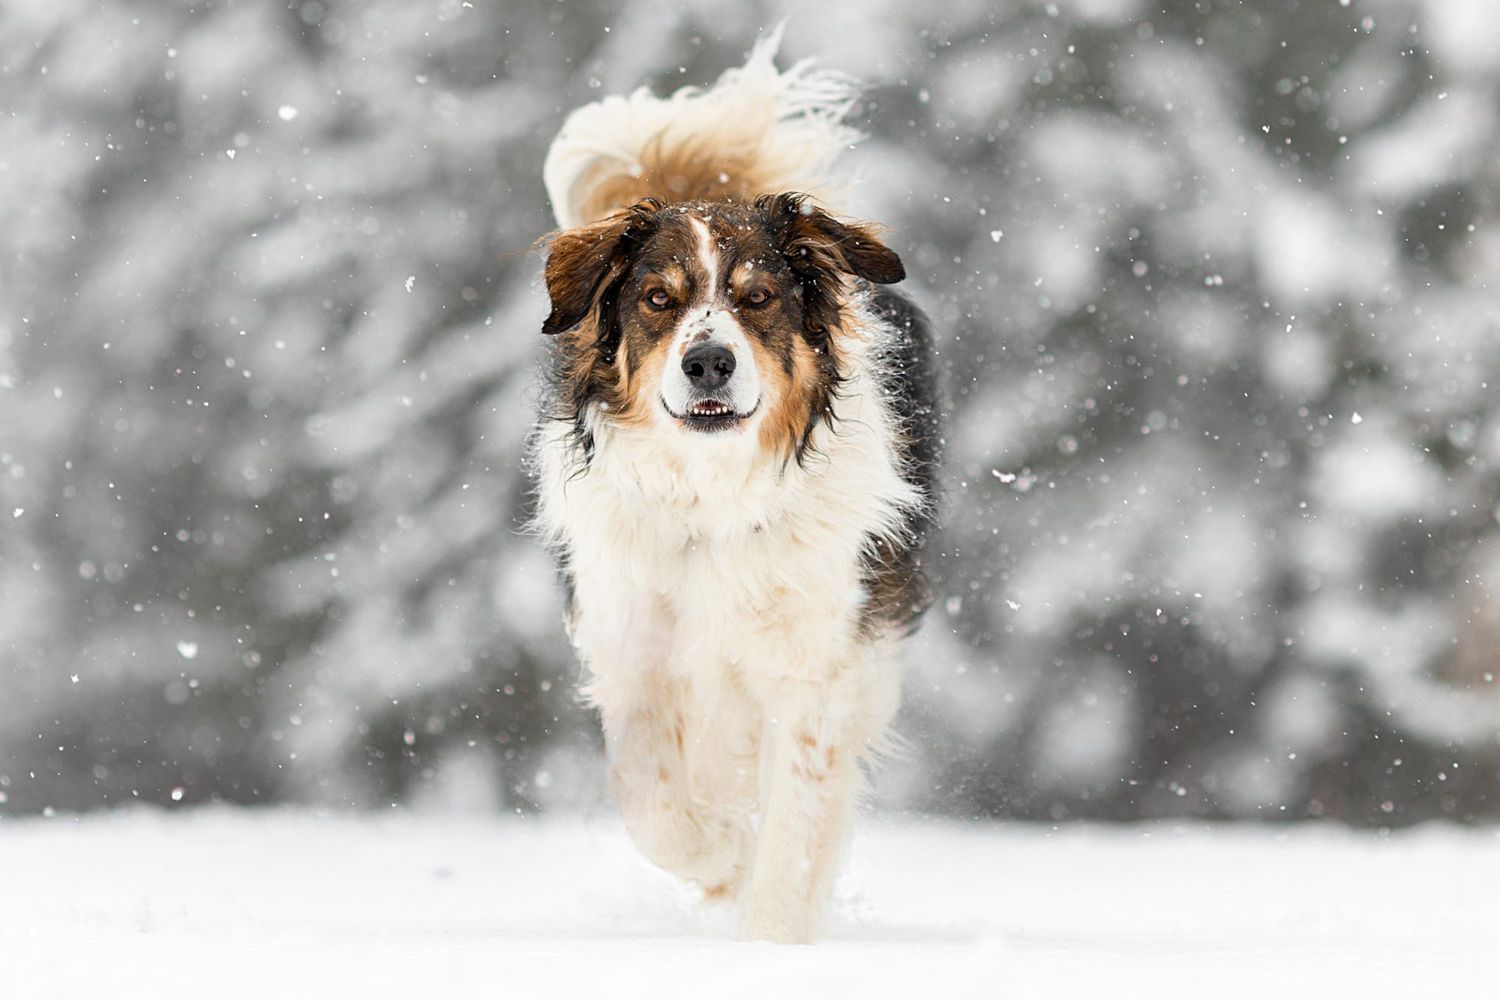 English shepherd runs through snow